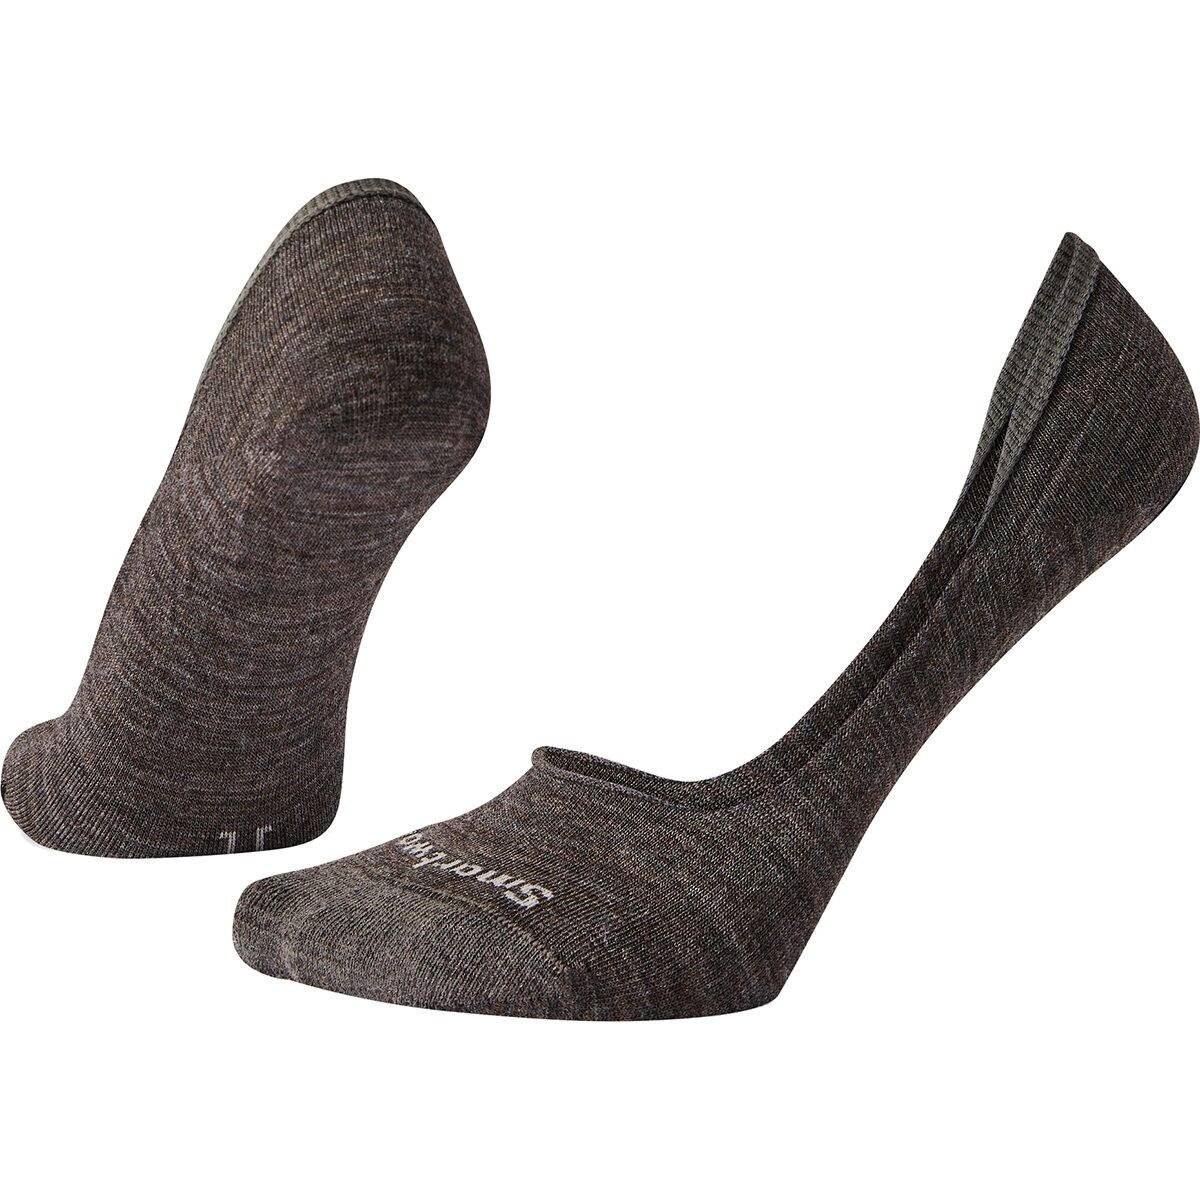 The grey no-shoe socks